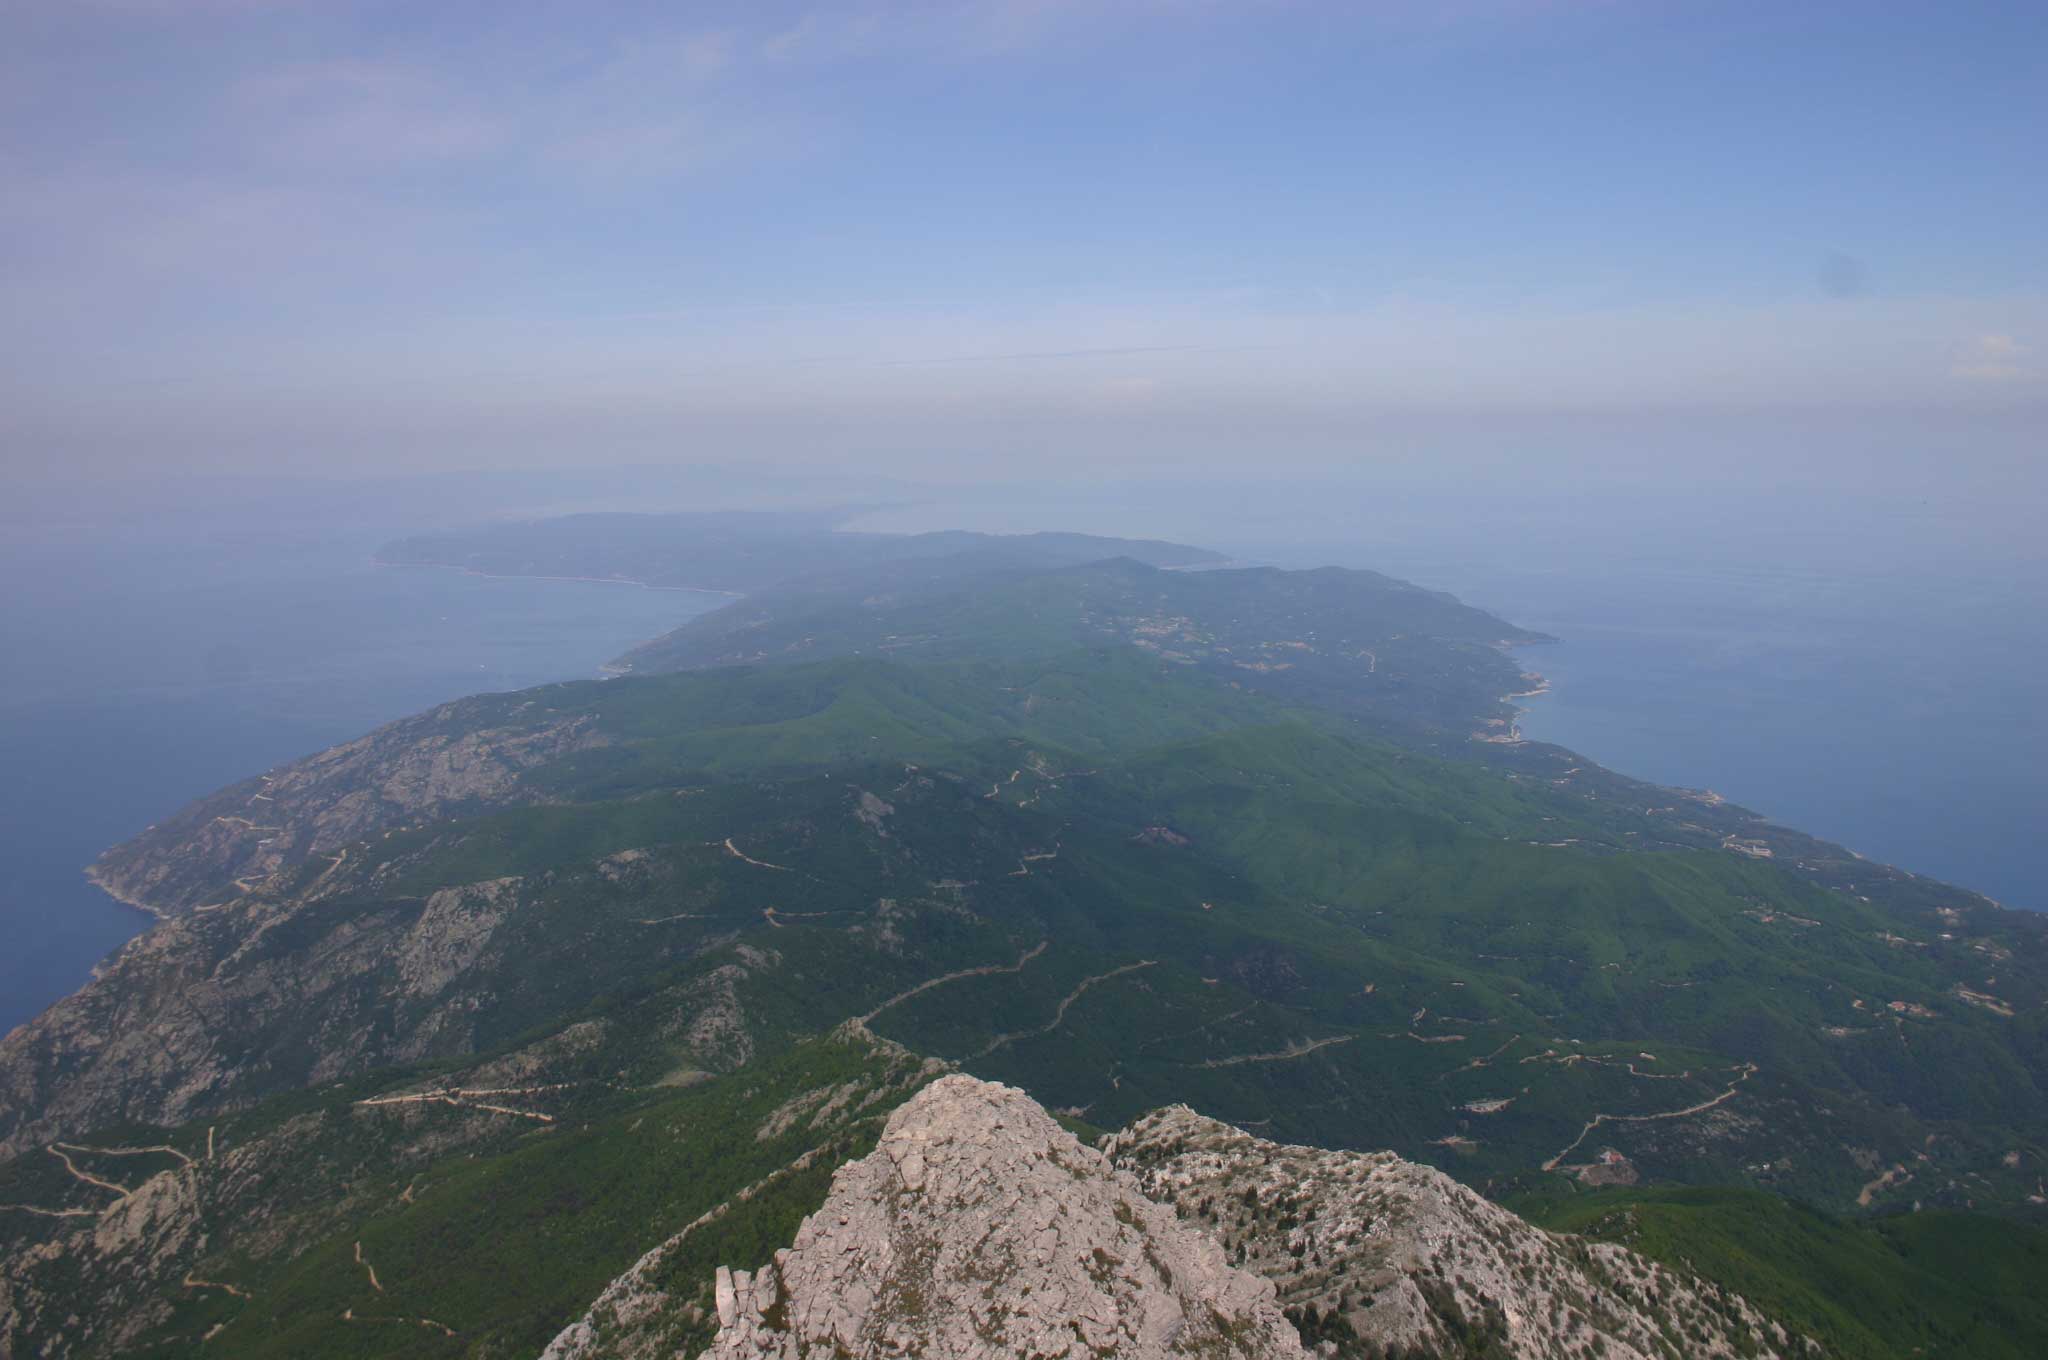 Mount Athos
Mt Athos - Along the Peninsula From Mt Athos© William Mackesy